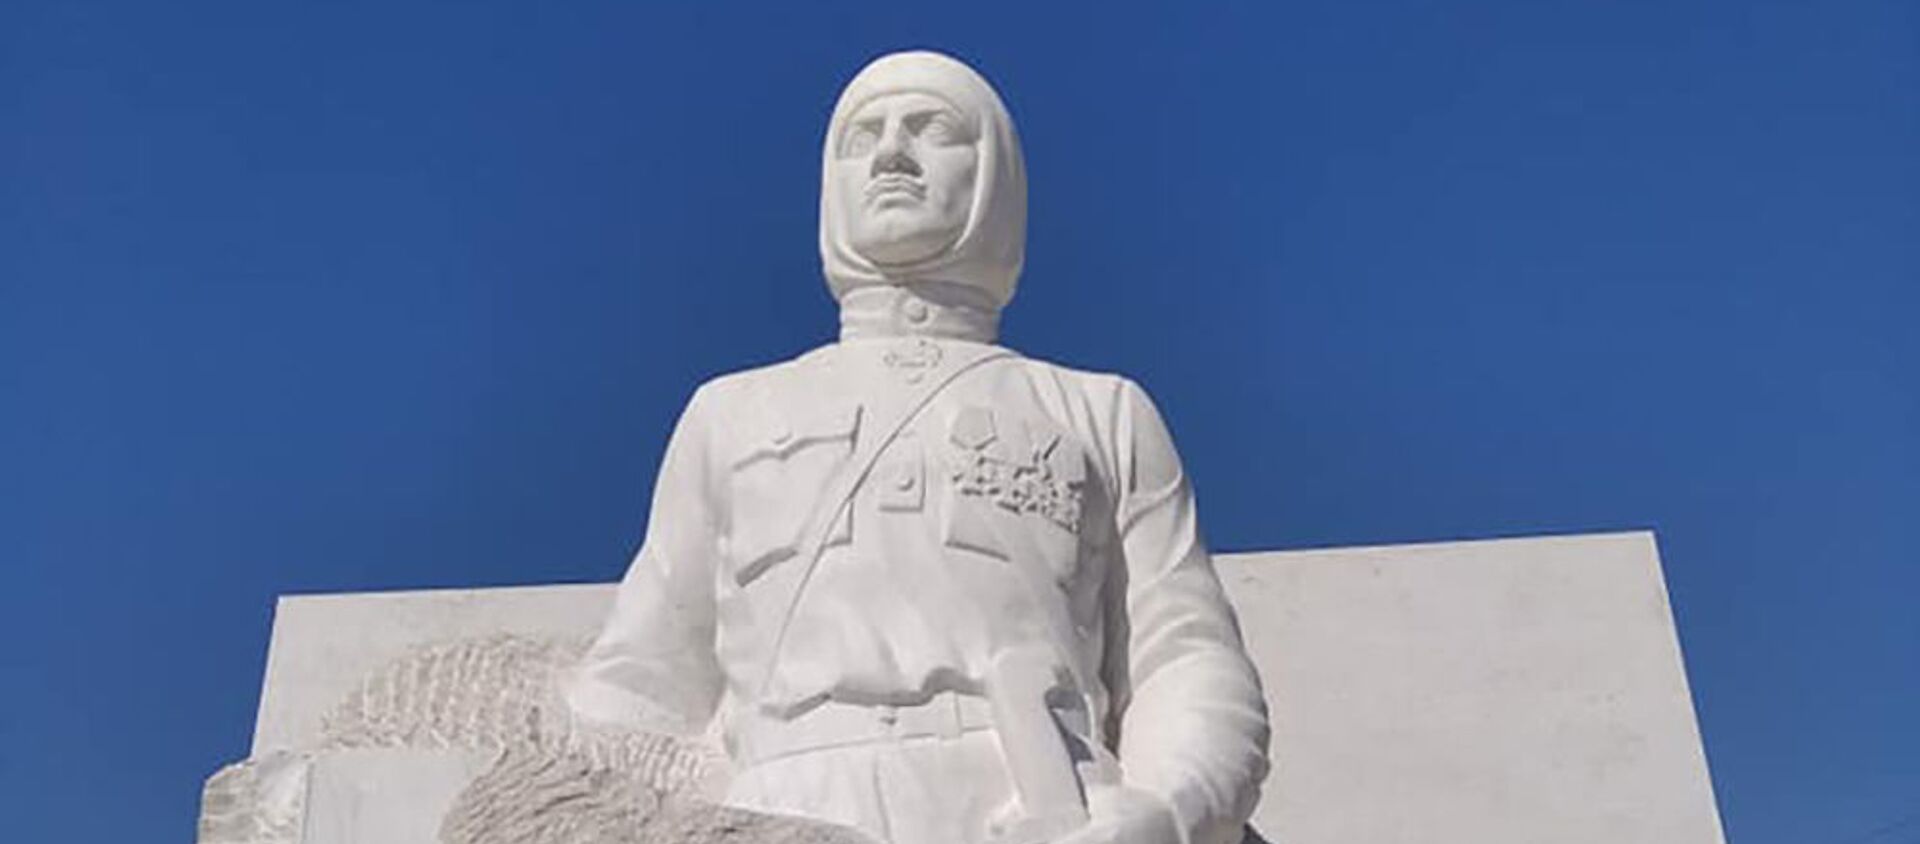 Памятник Гарегину Нжде в Мартуни - Sputnik Արմենիա, 1920, 12.02.2021